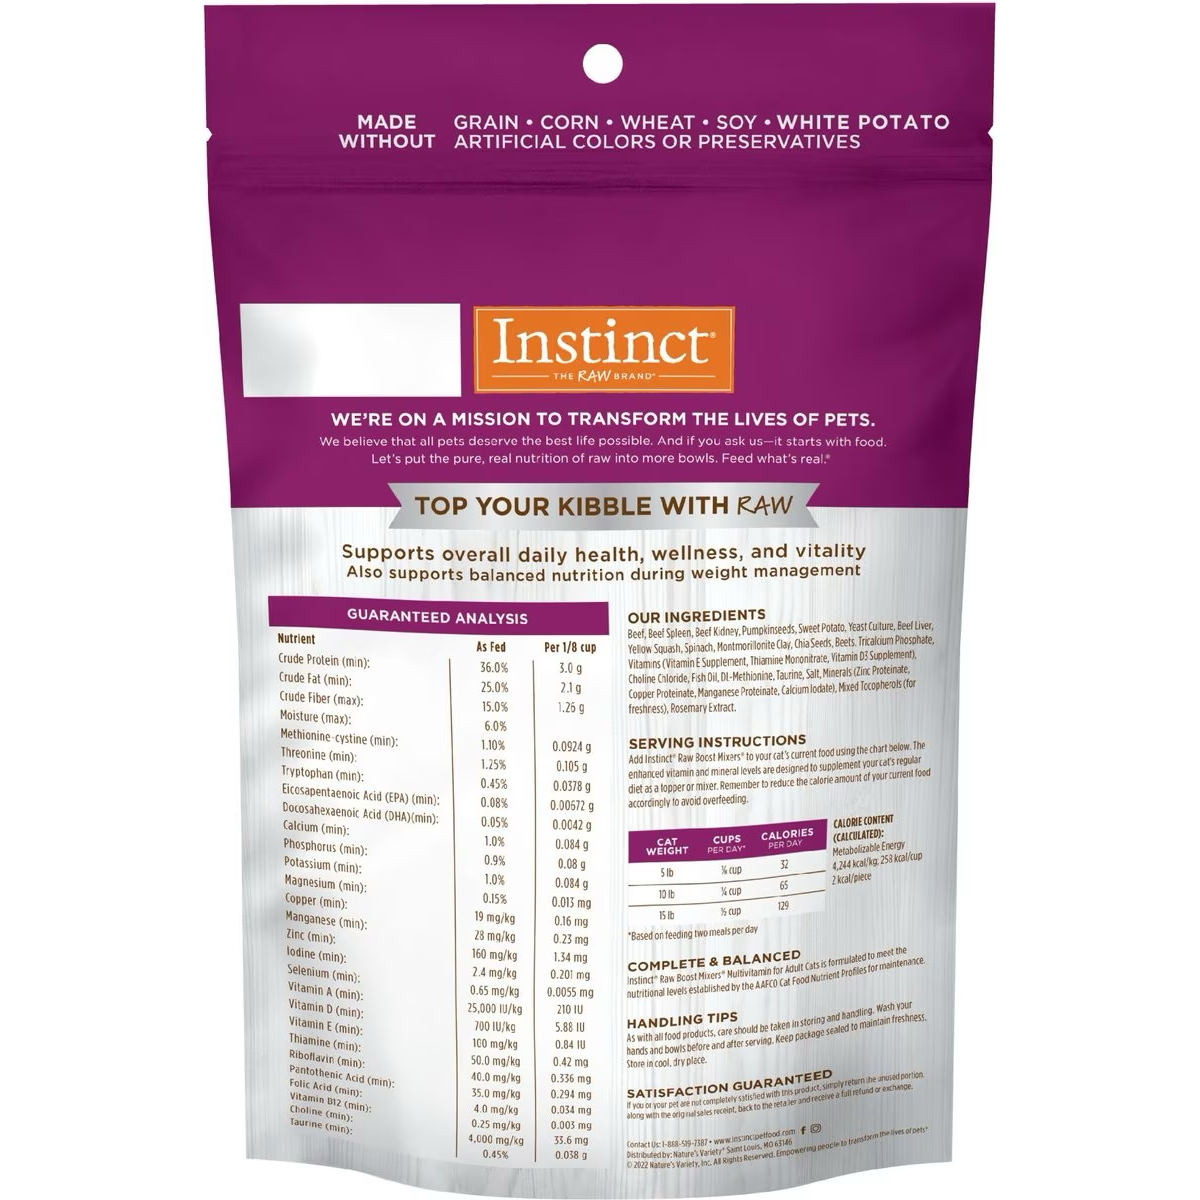 Instinct Boost Mixers Multivitamin Grain-Free Freeze-Dried Raw Adult Cat Food Topper  Cat Food  | PetMax Canada